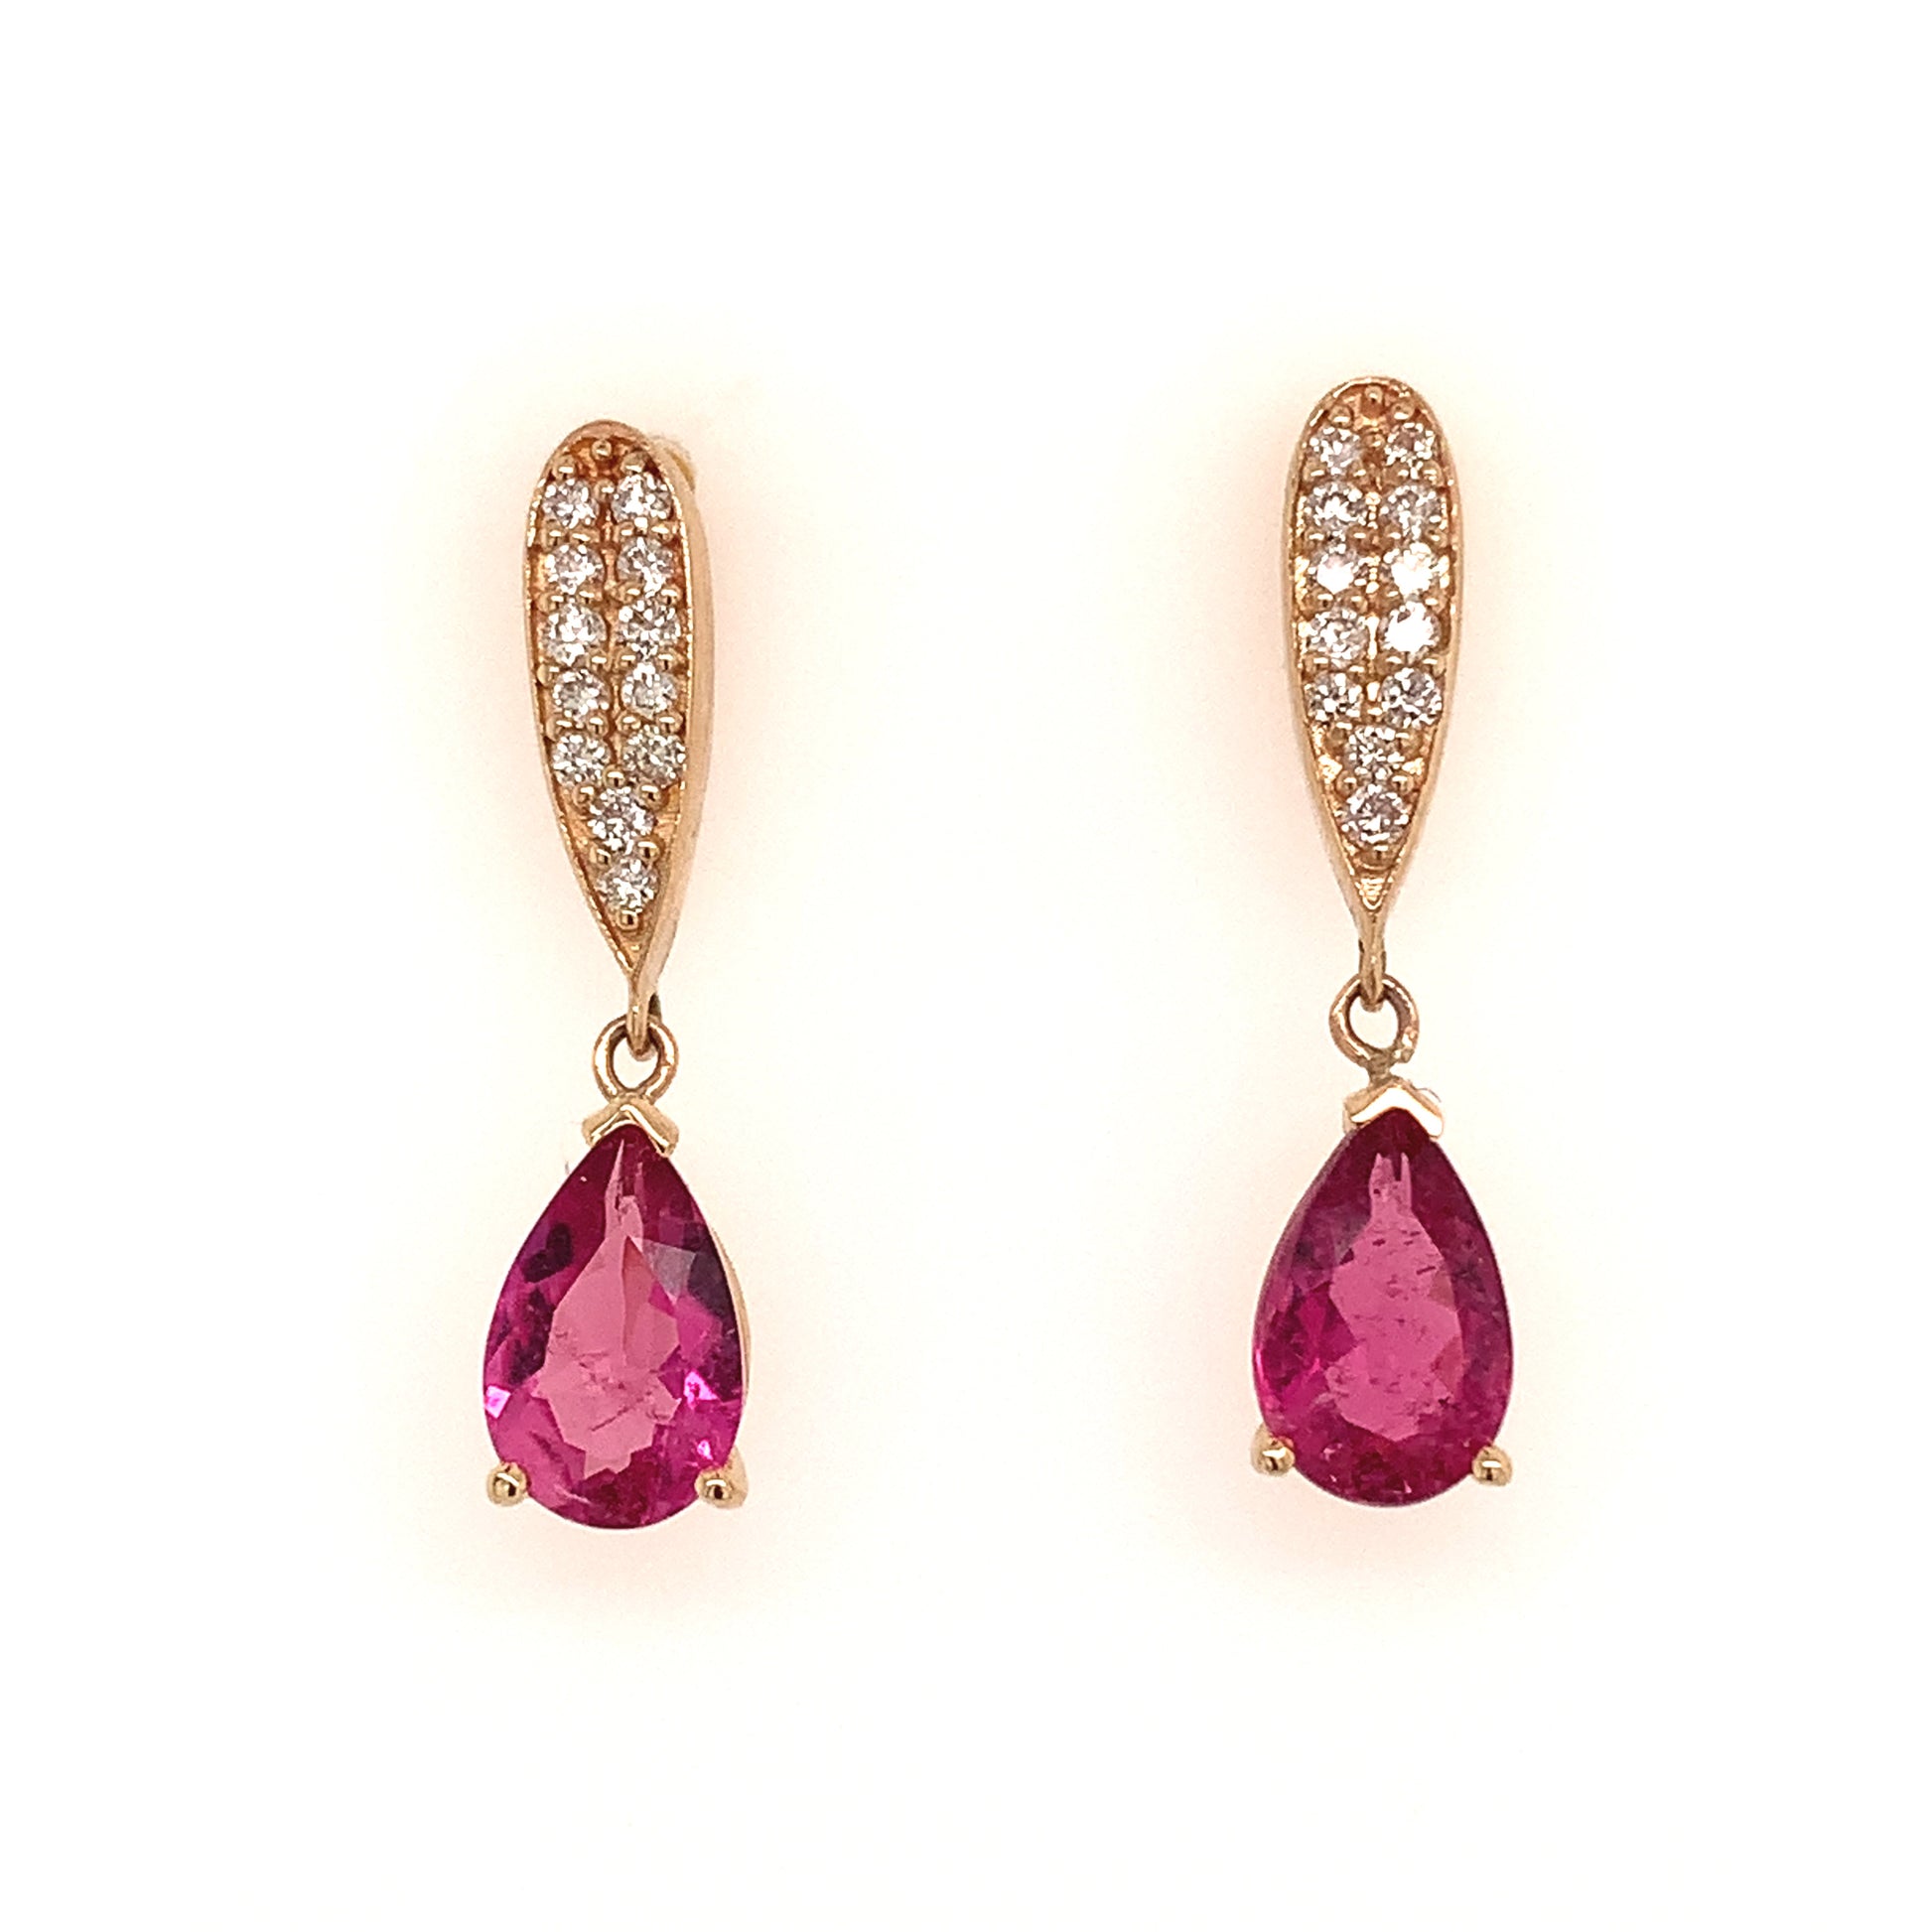 Natural Tourmaline Rubellite Diamond Earrings 14k Gold 1.60 TCW Certified $3,090 018673 - Certified Fine Jewelry